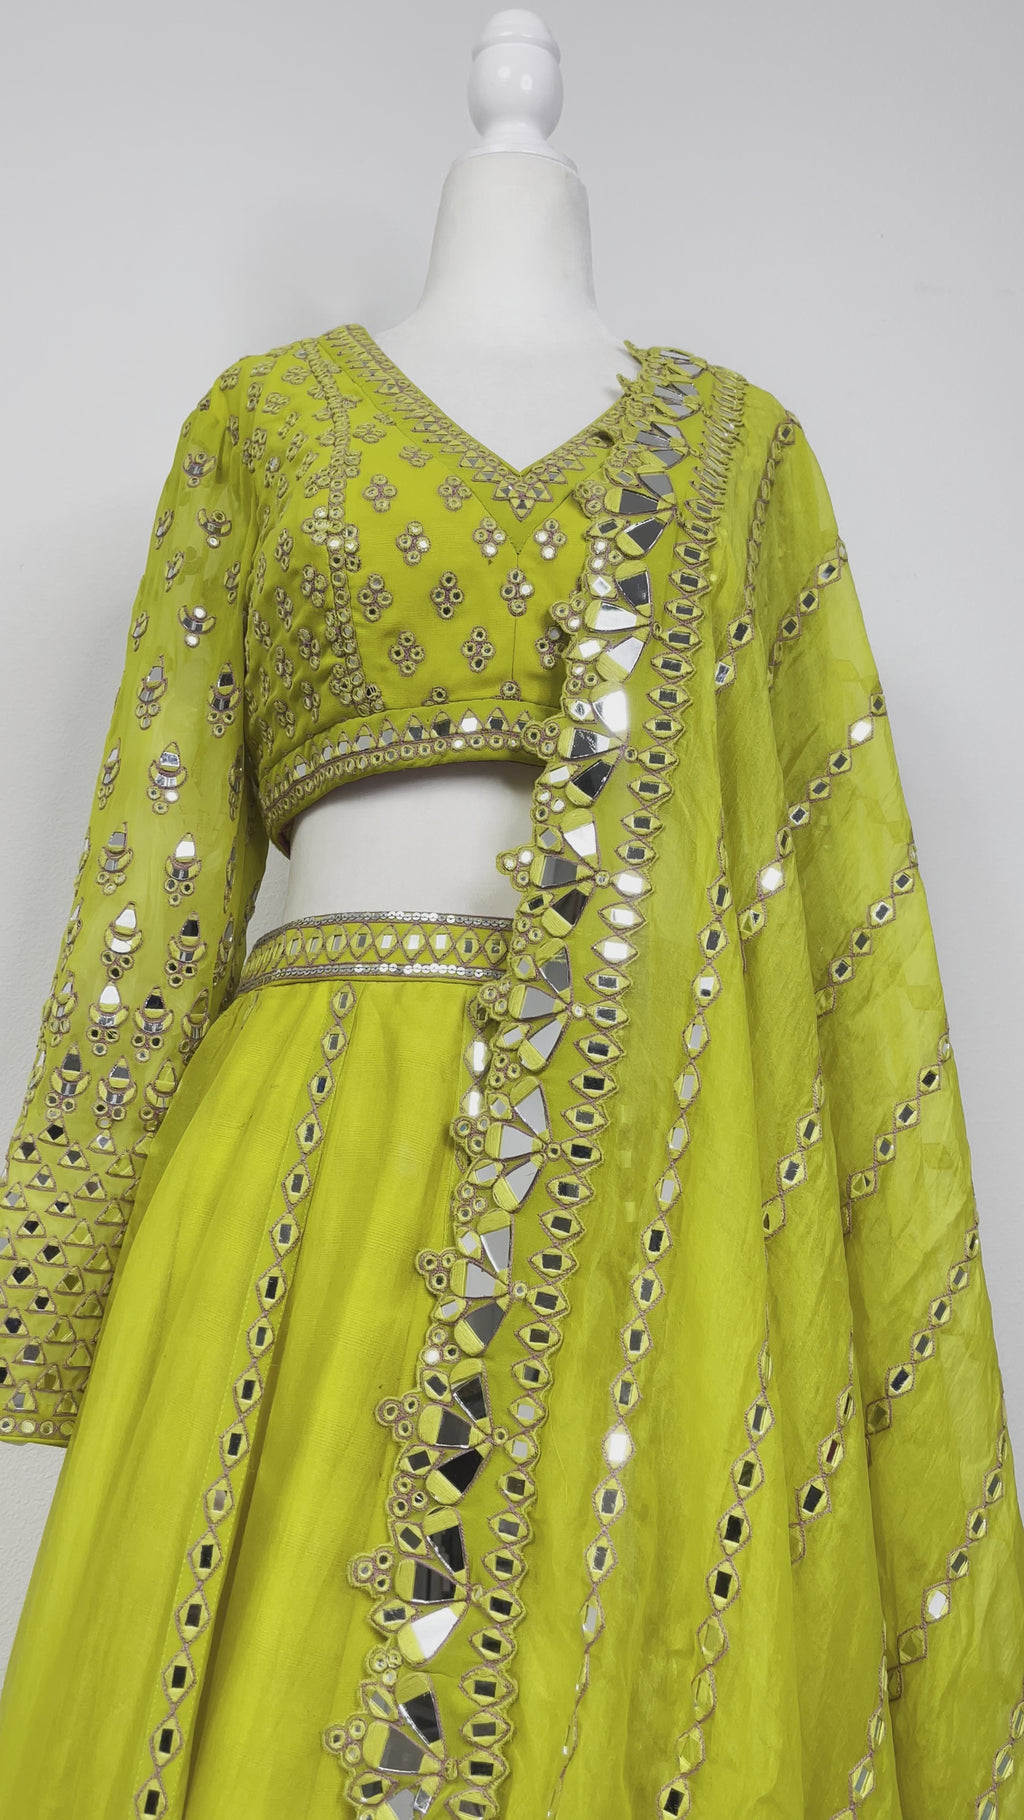 Moss Green/yellow Vvani 3 piece lehenga including skirt, blouse,& dupatta with mirror work by Vani Vats